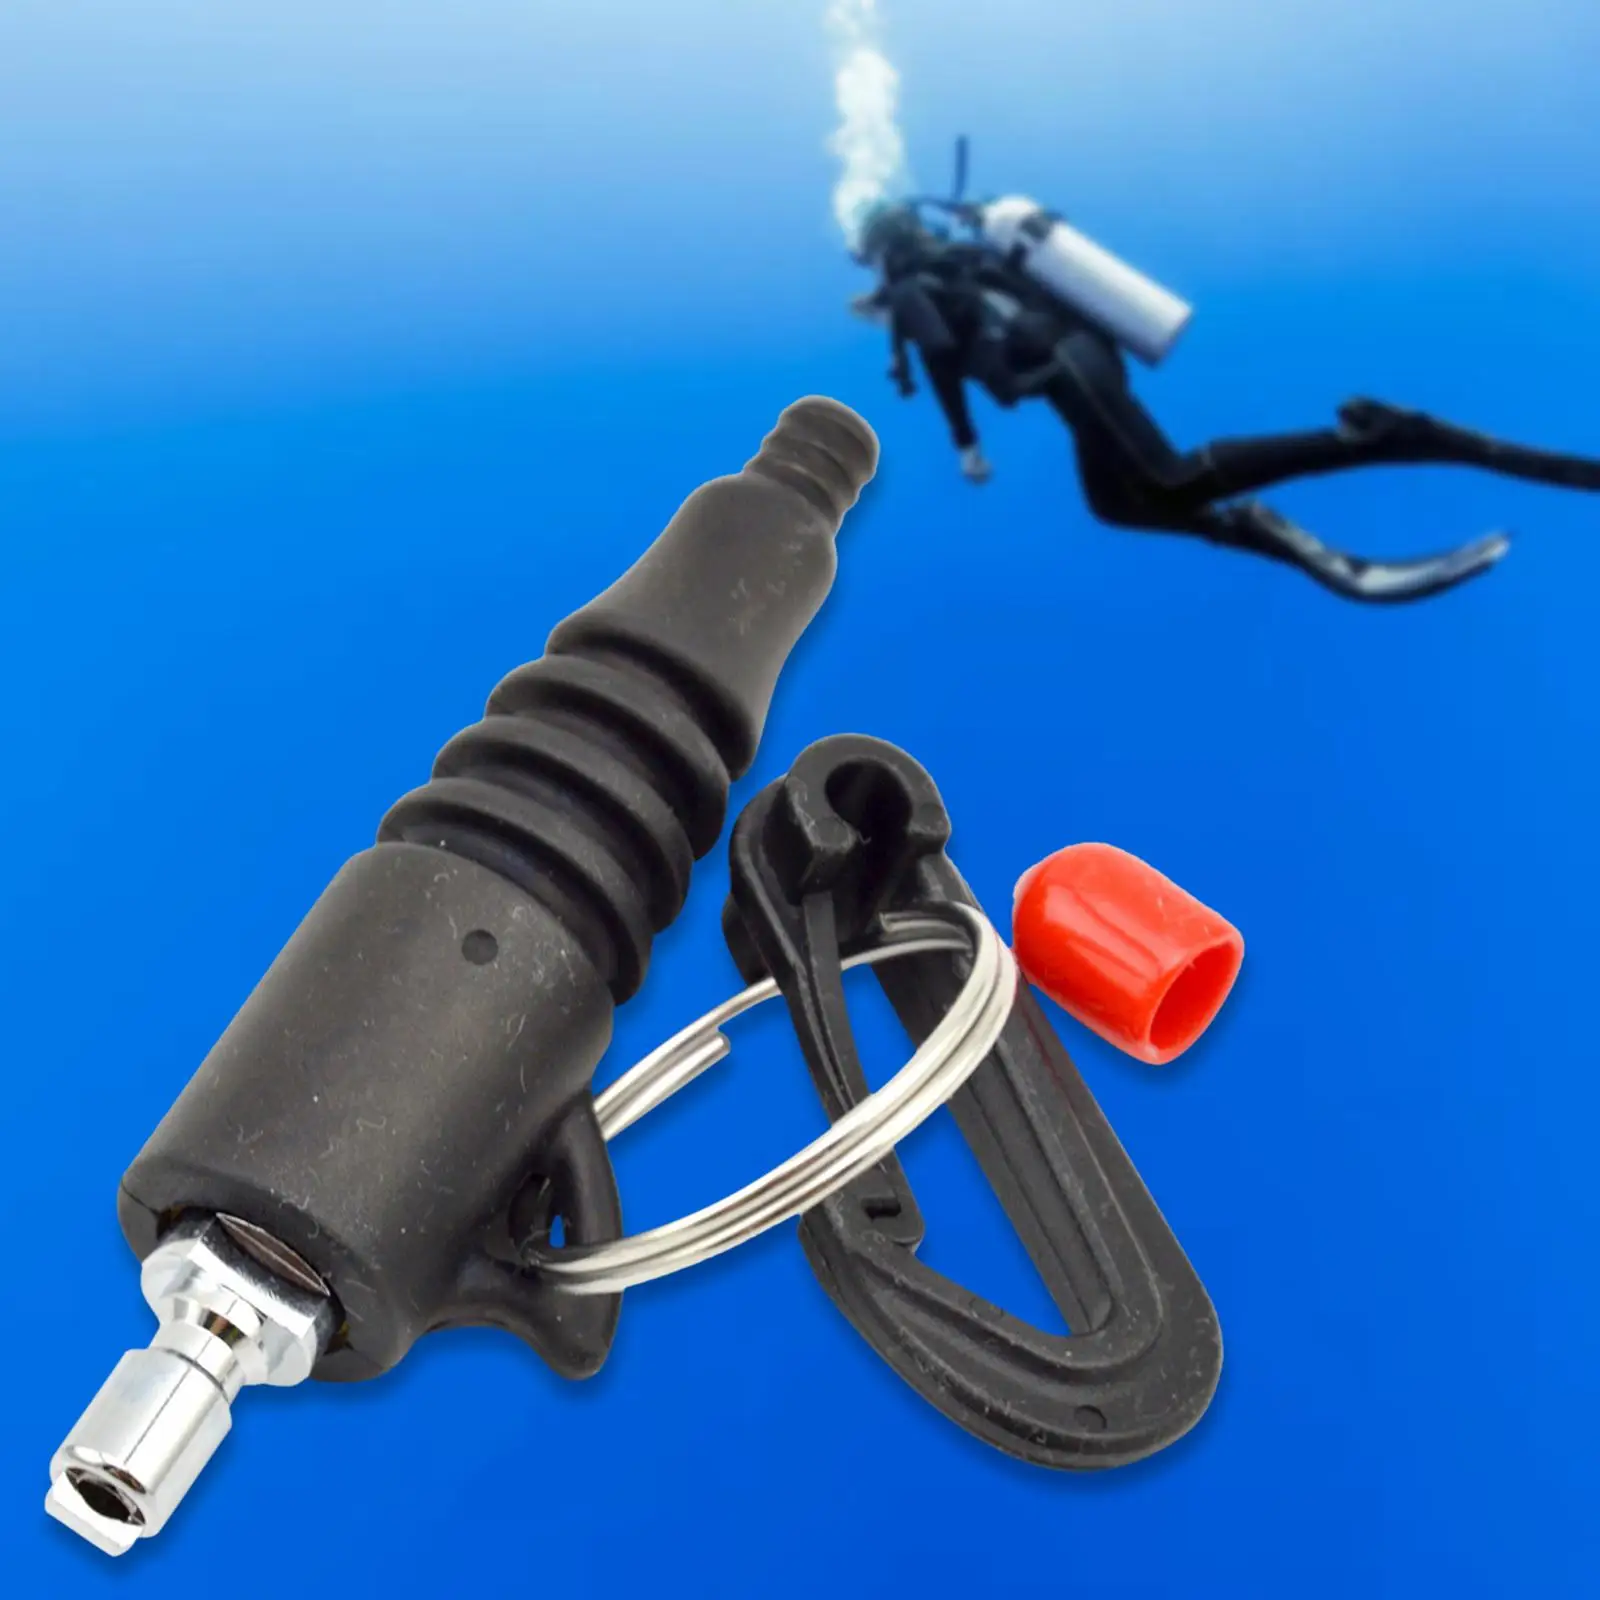 Professional Scuba Diving Air Gun Nozzle for BCD Inflator Hose Diver Snorkeling